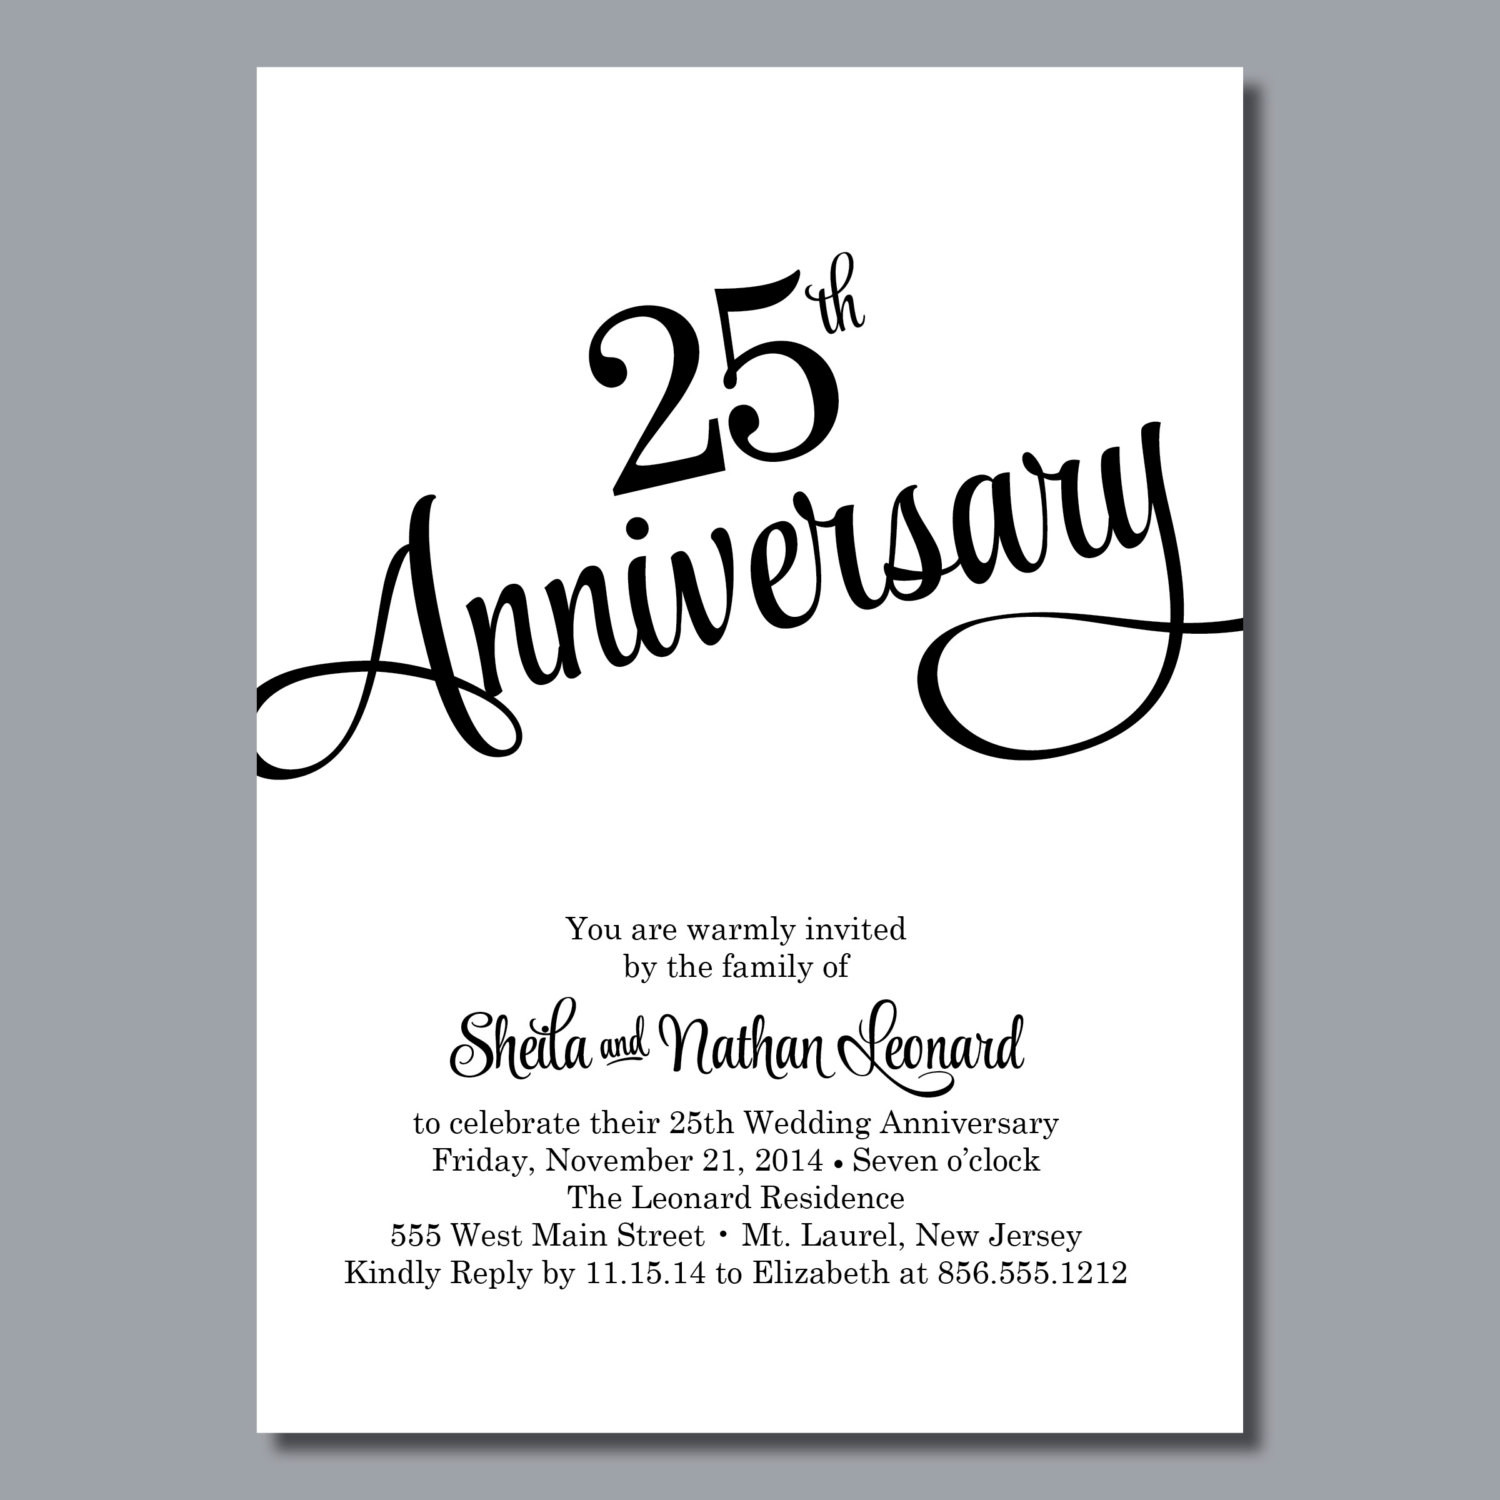 25th Birthday Invitation Wording
 25th Wedding Anniversary Invitation – DIY Printable or